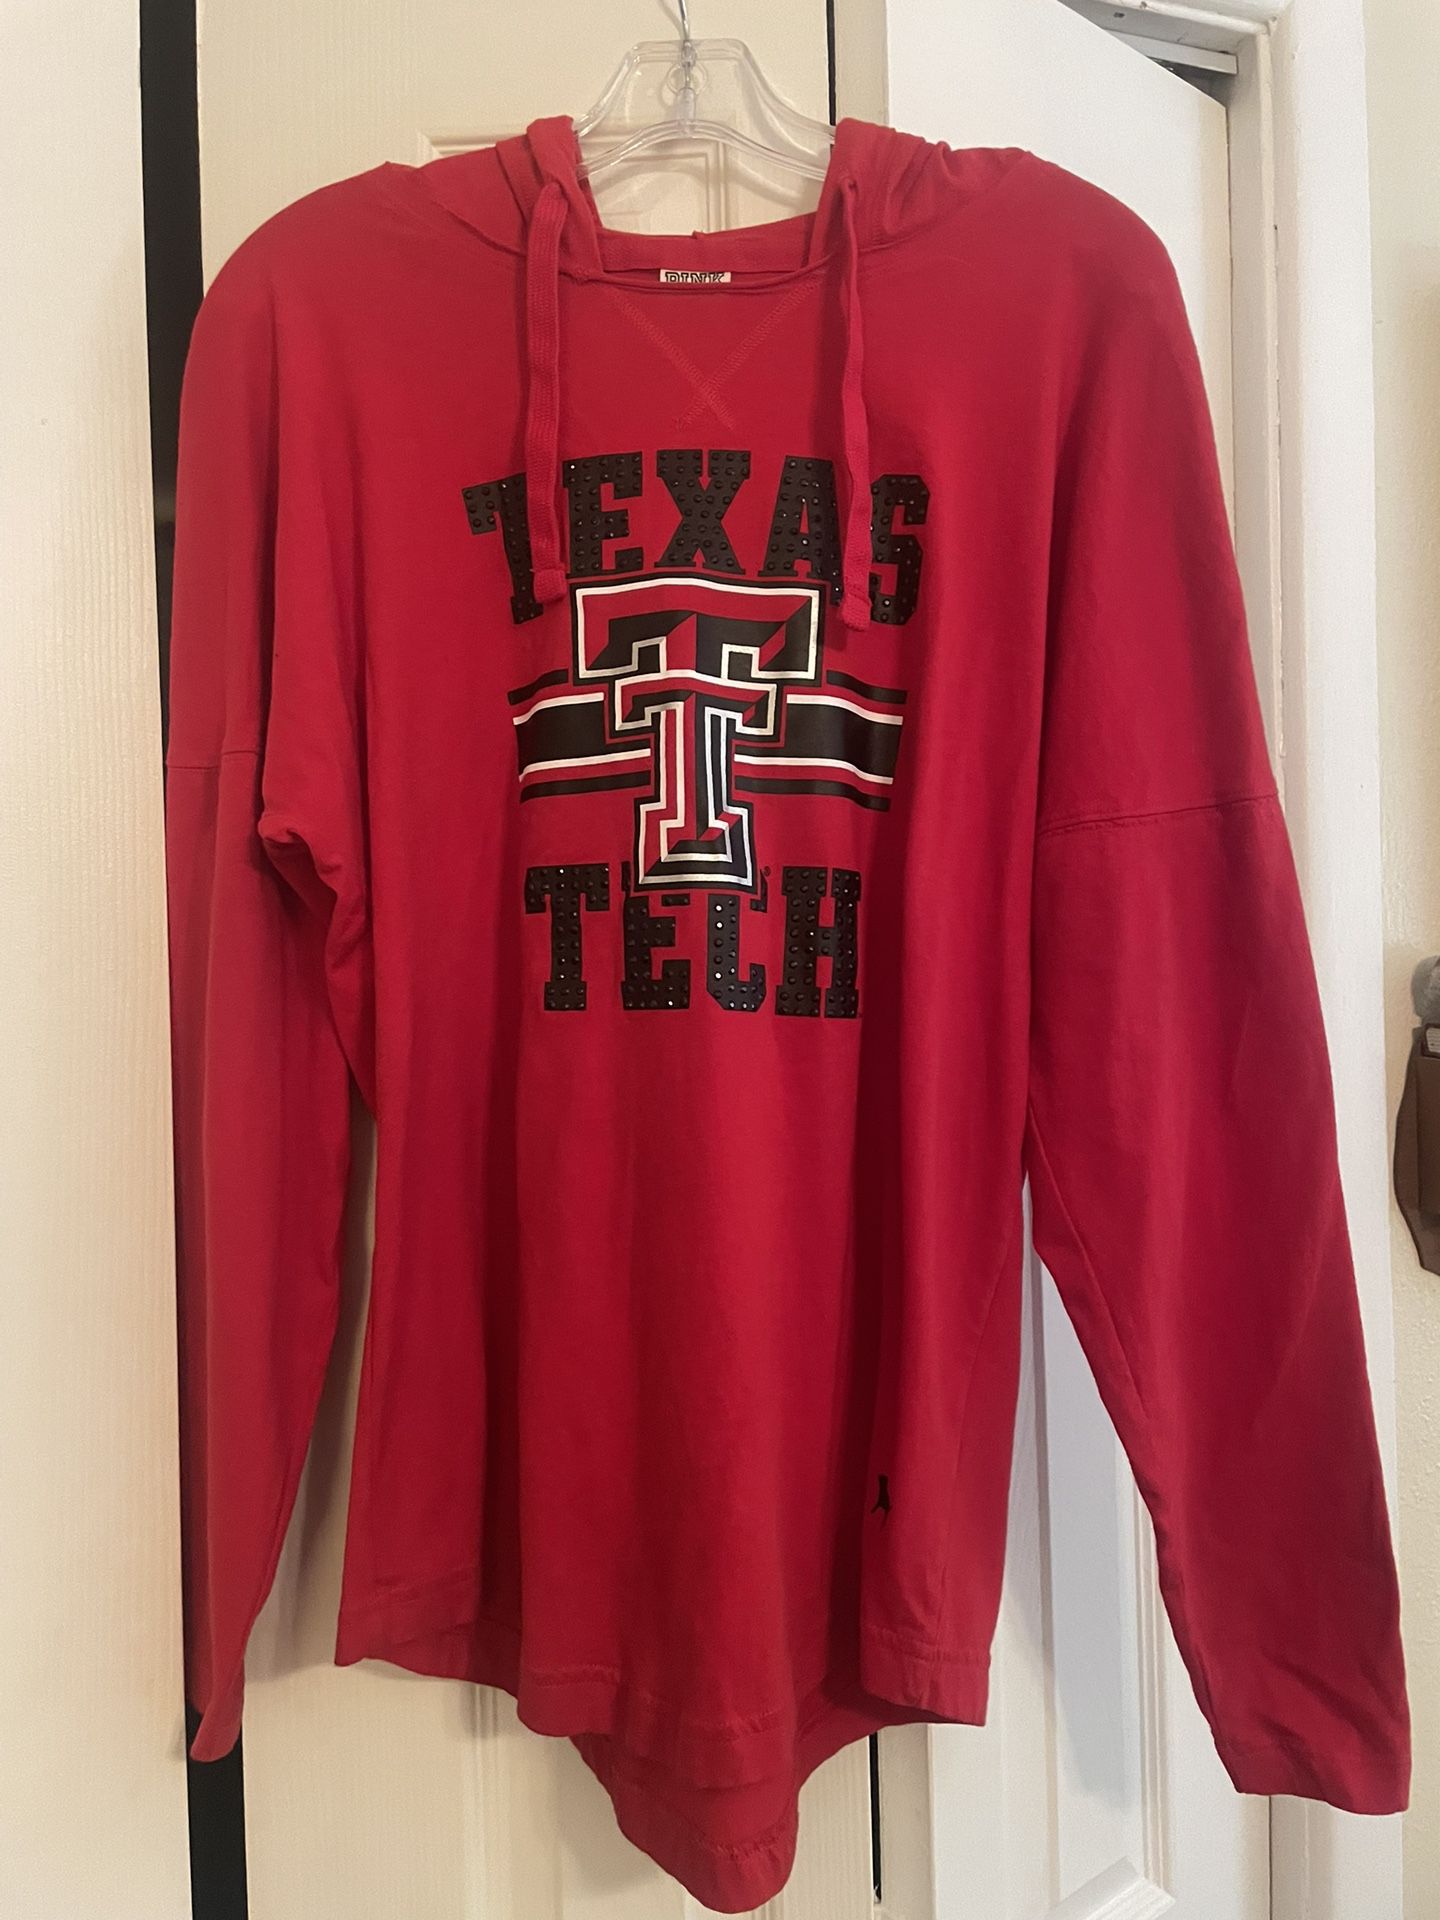 PINK Texas Tech T-Shirt Hoodie